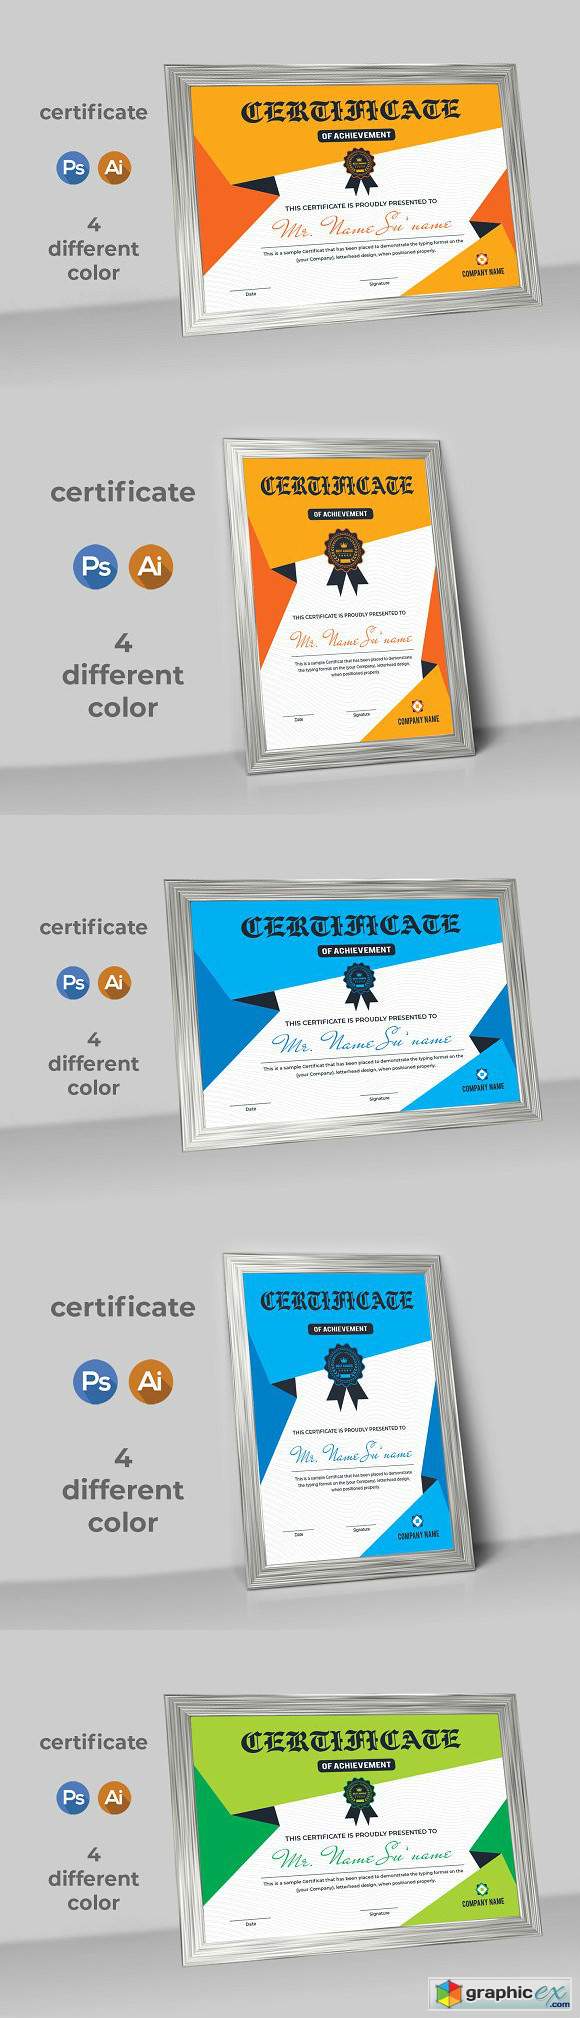 Certificate Print Ready Template 2708485